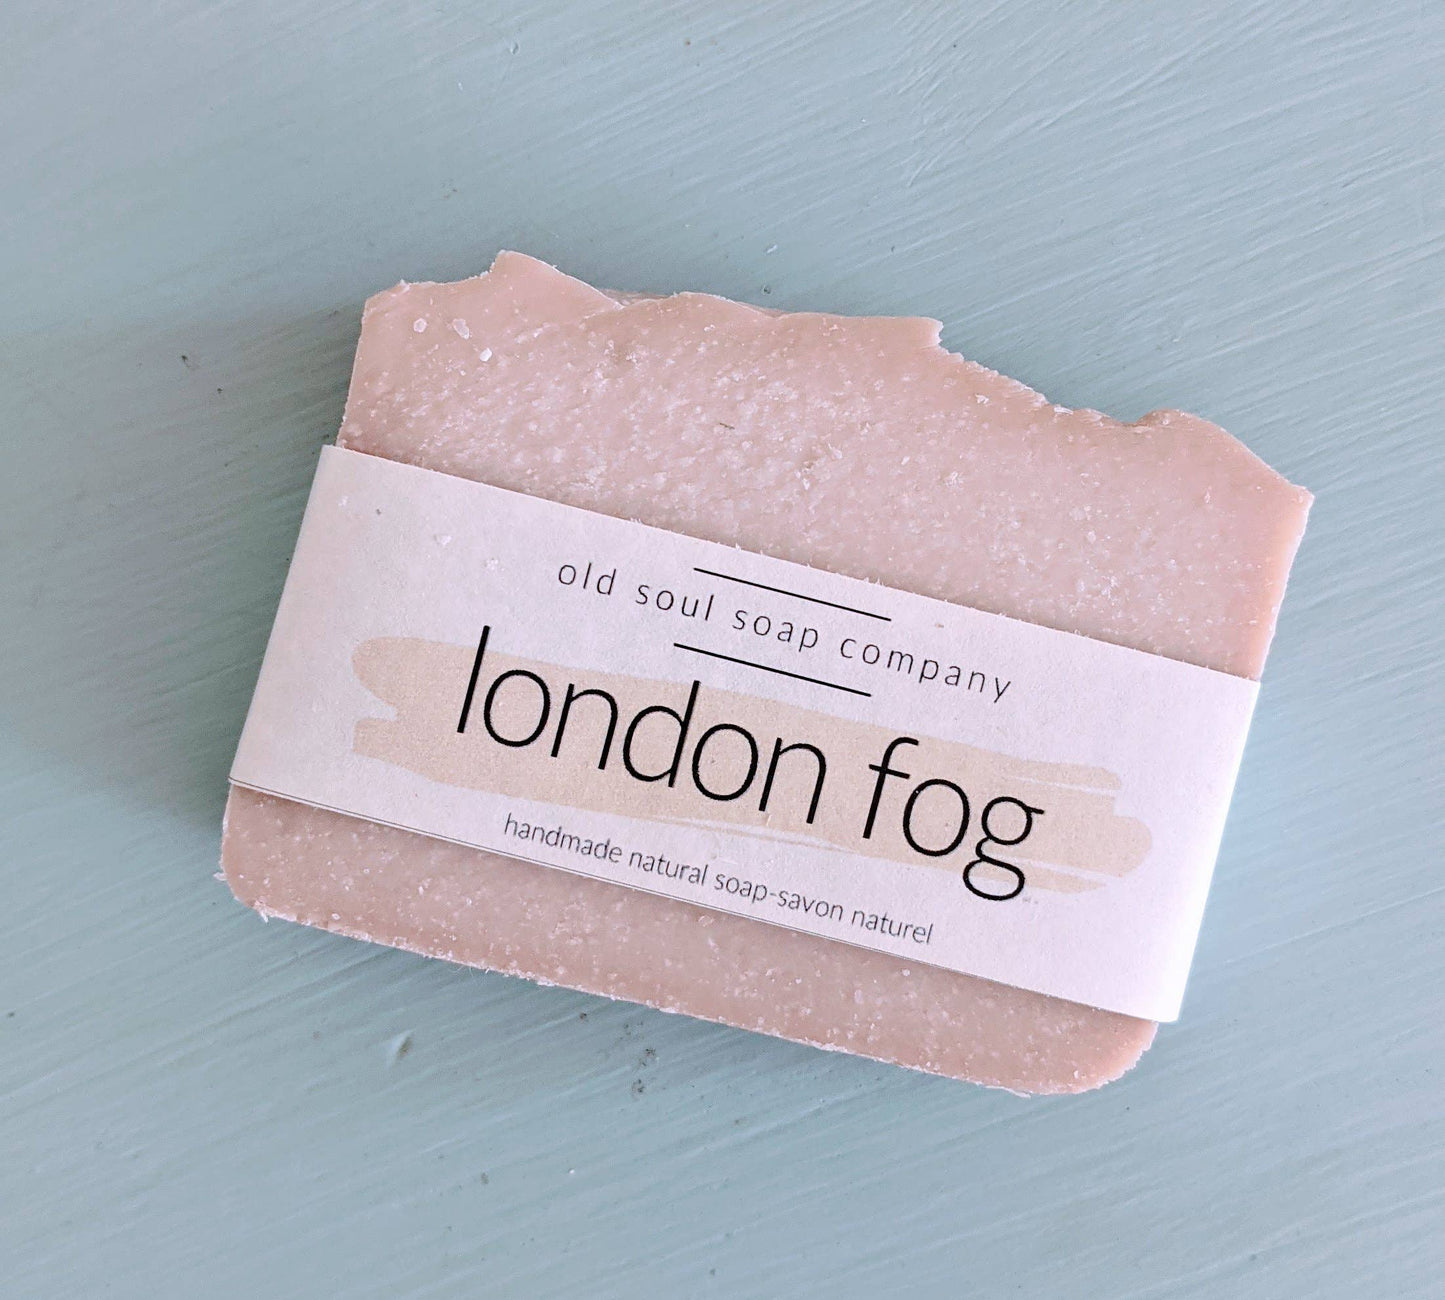 London Fog Soap